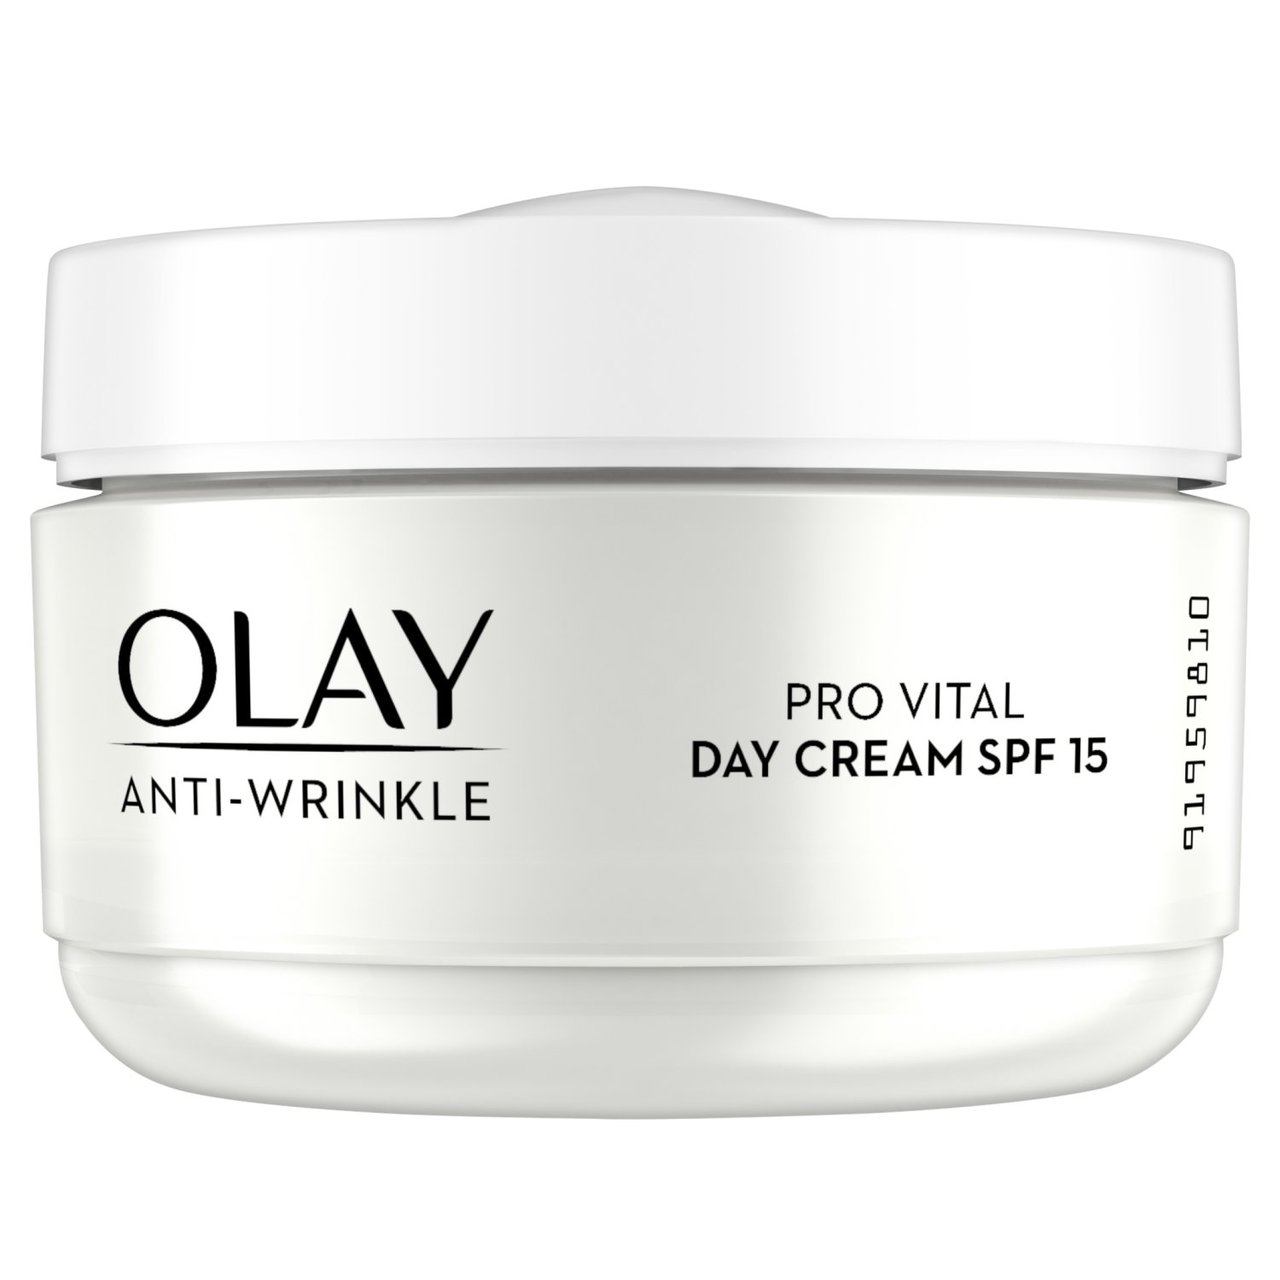 Olay Anti Wrinkle Pro Vital Spf 15 Day Cream